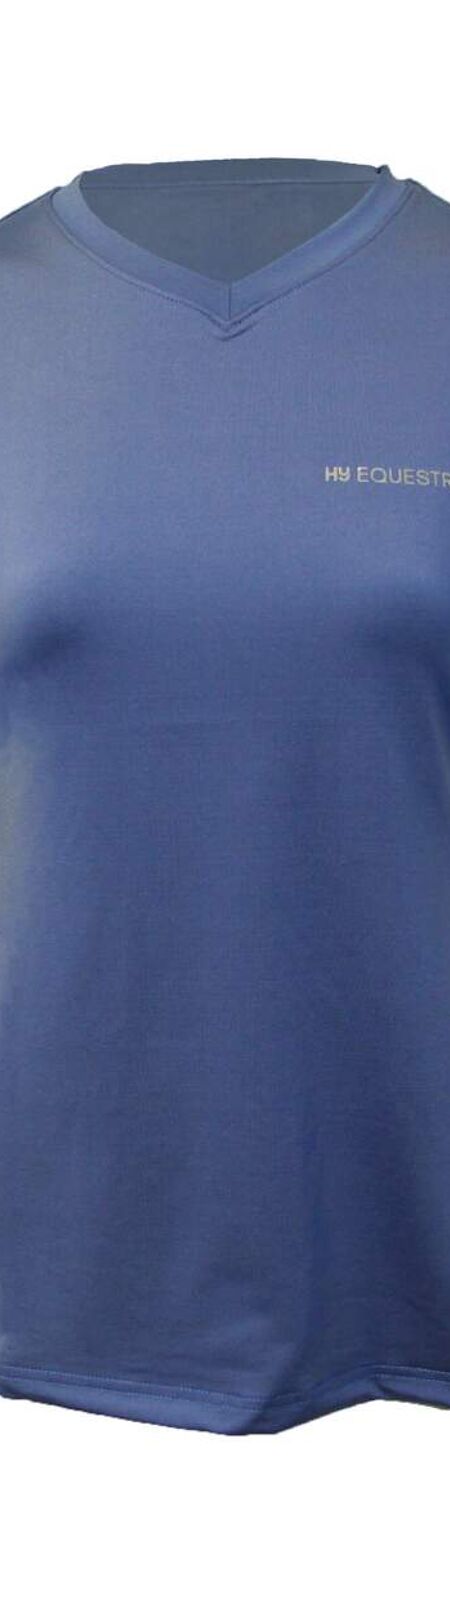 Hy - T-shirt SYNERGY - Femme (Bleuet) - UTBZ4664